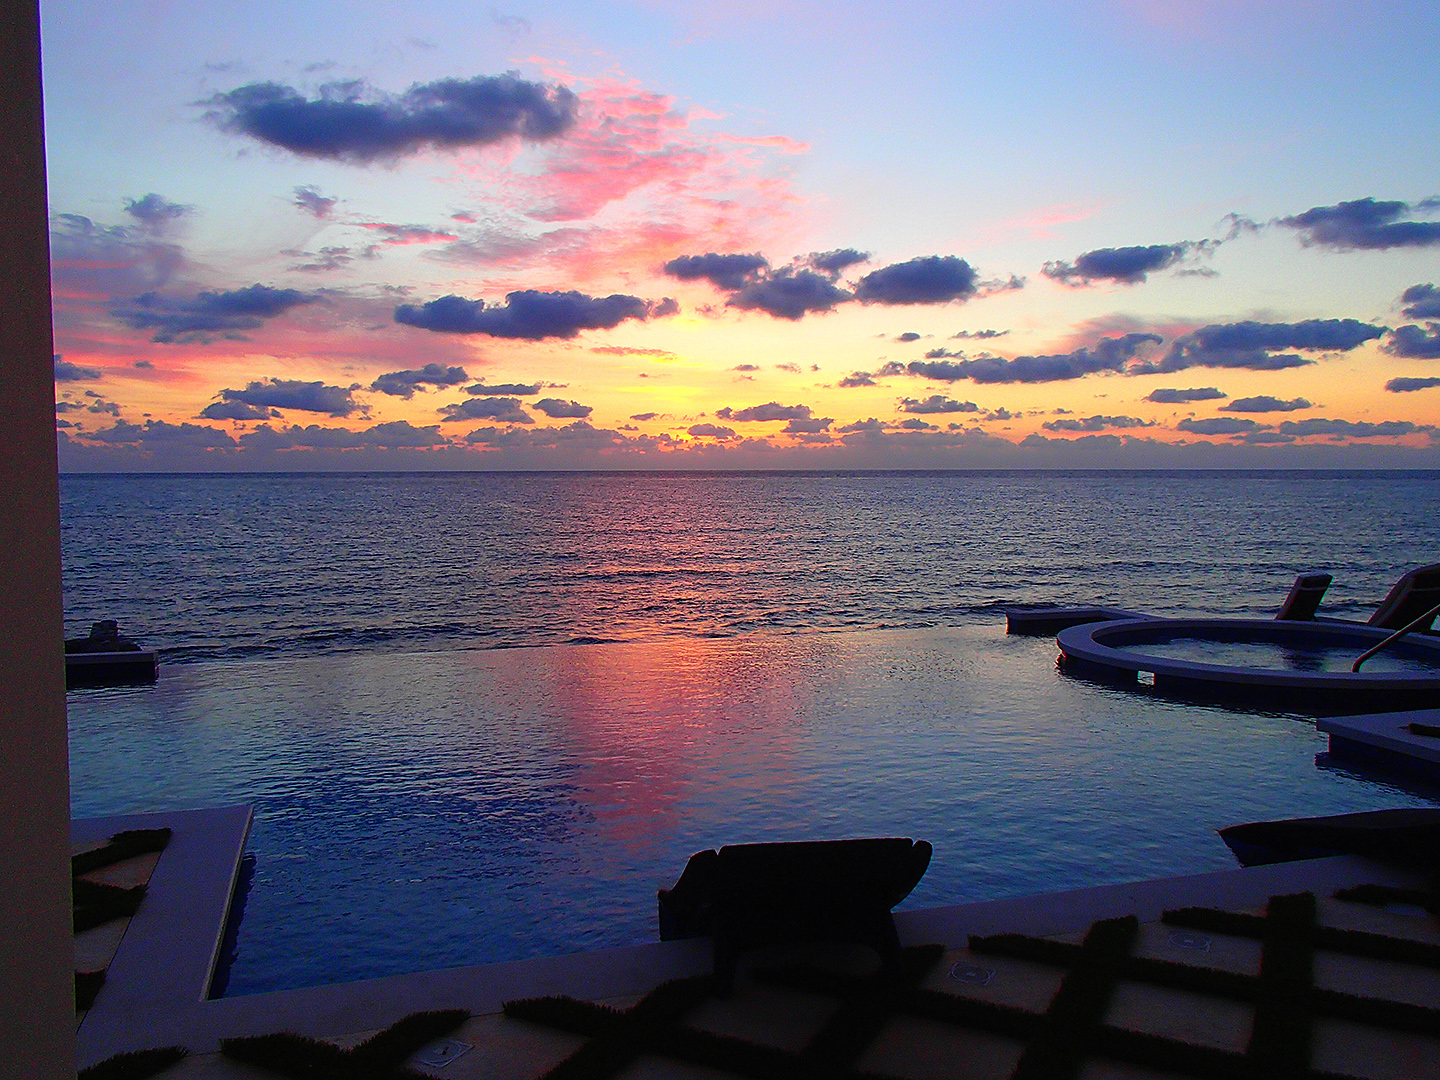 Sunrise on the Caribbean